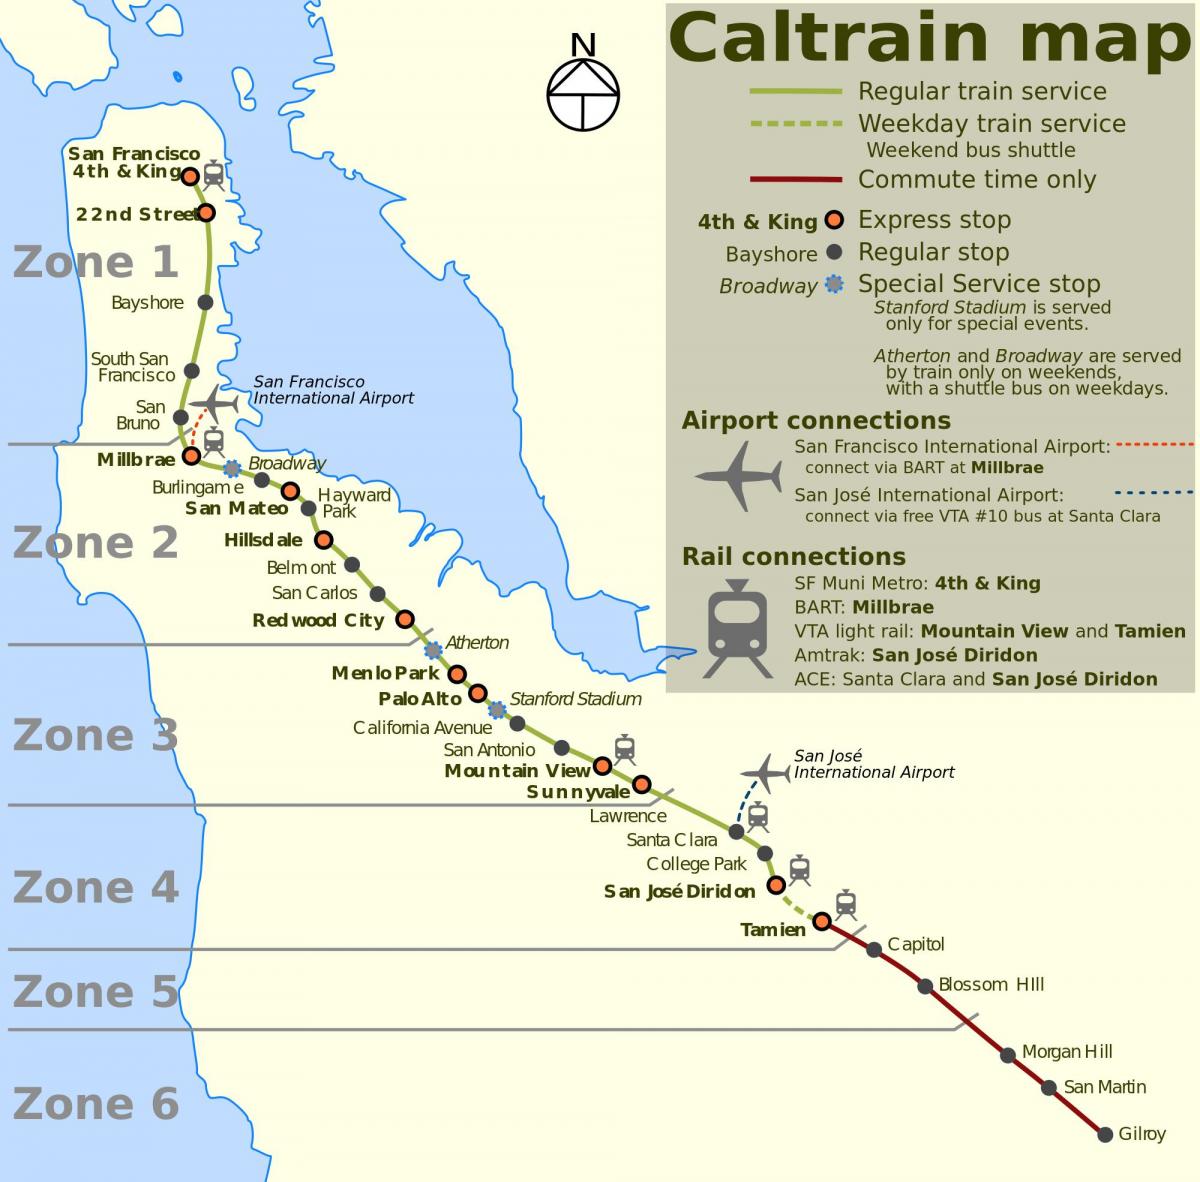 San Francisco caltrain karta